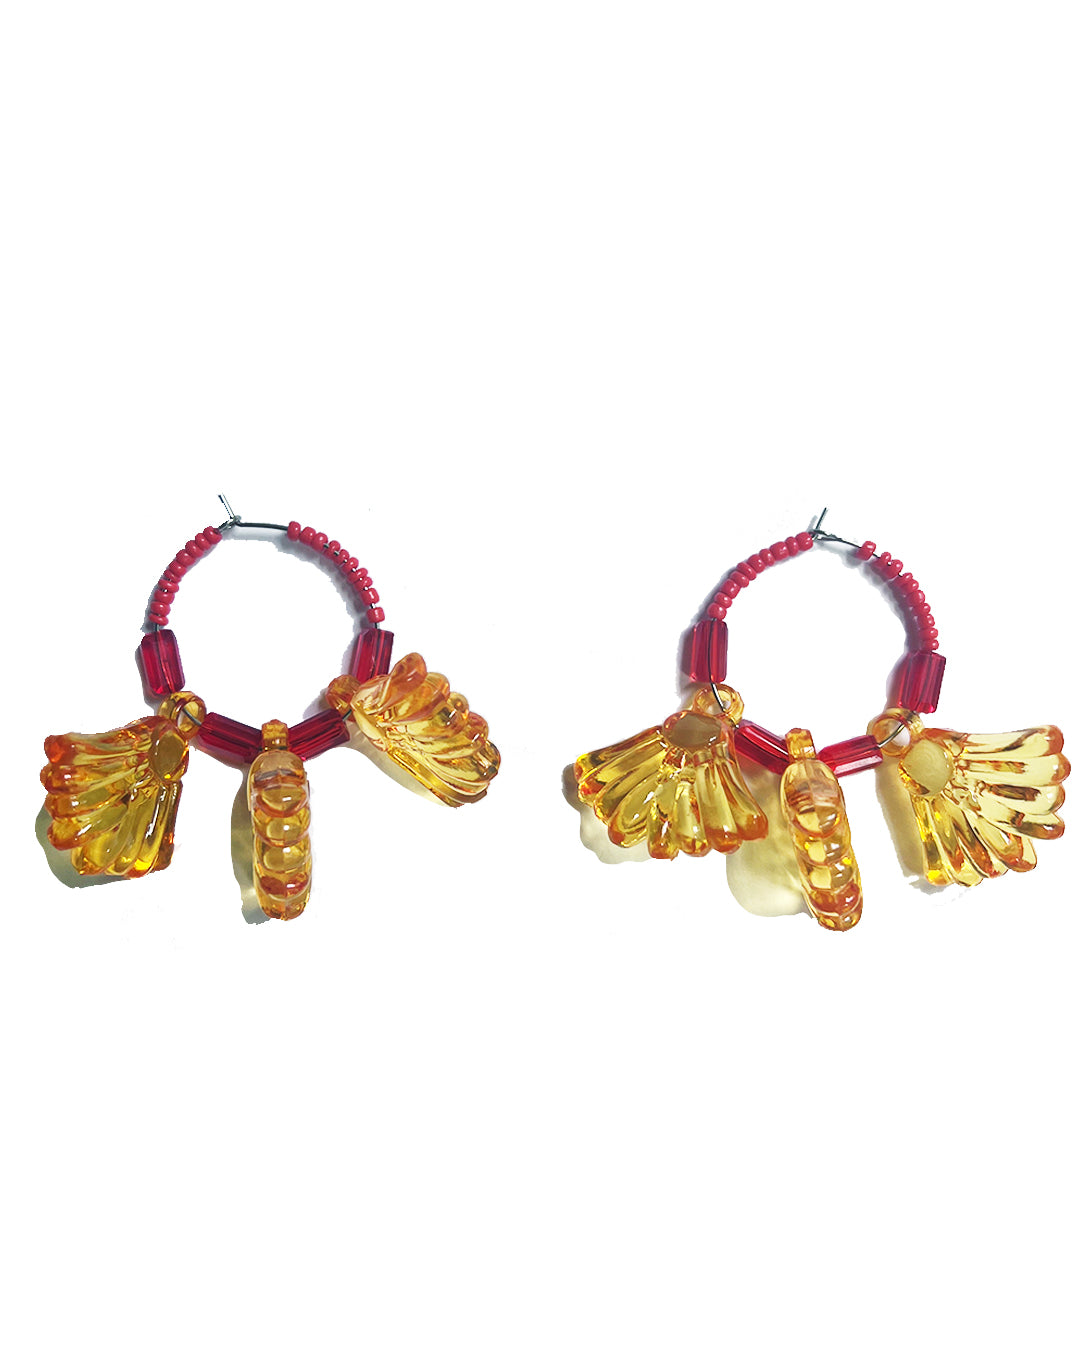 Orange Red Fiesta Earrings  | cukimber designs